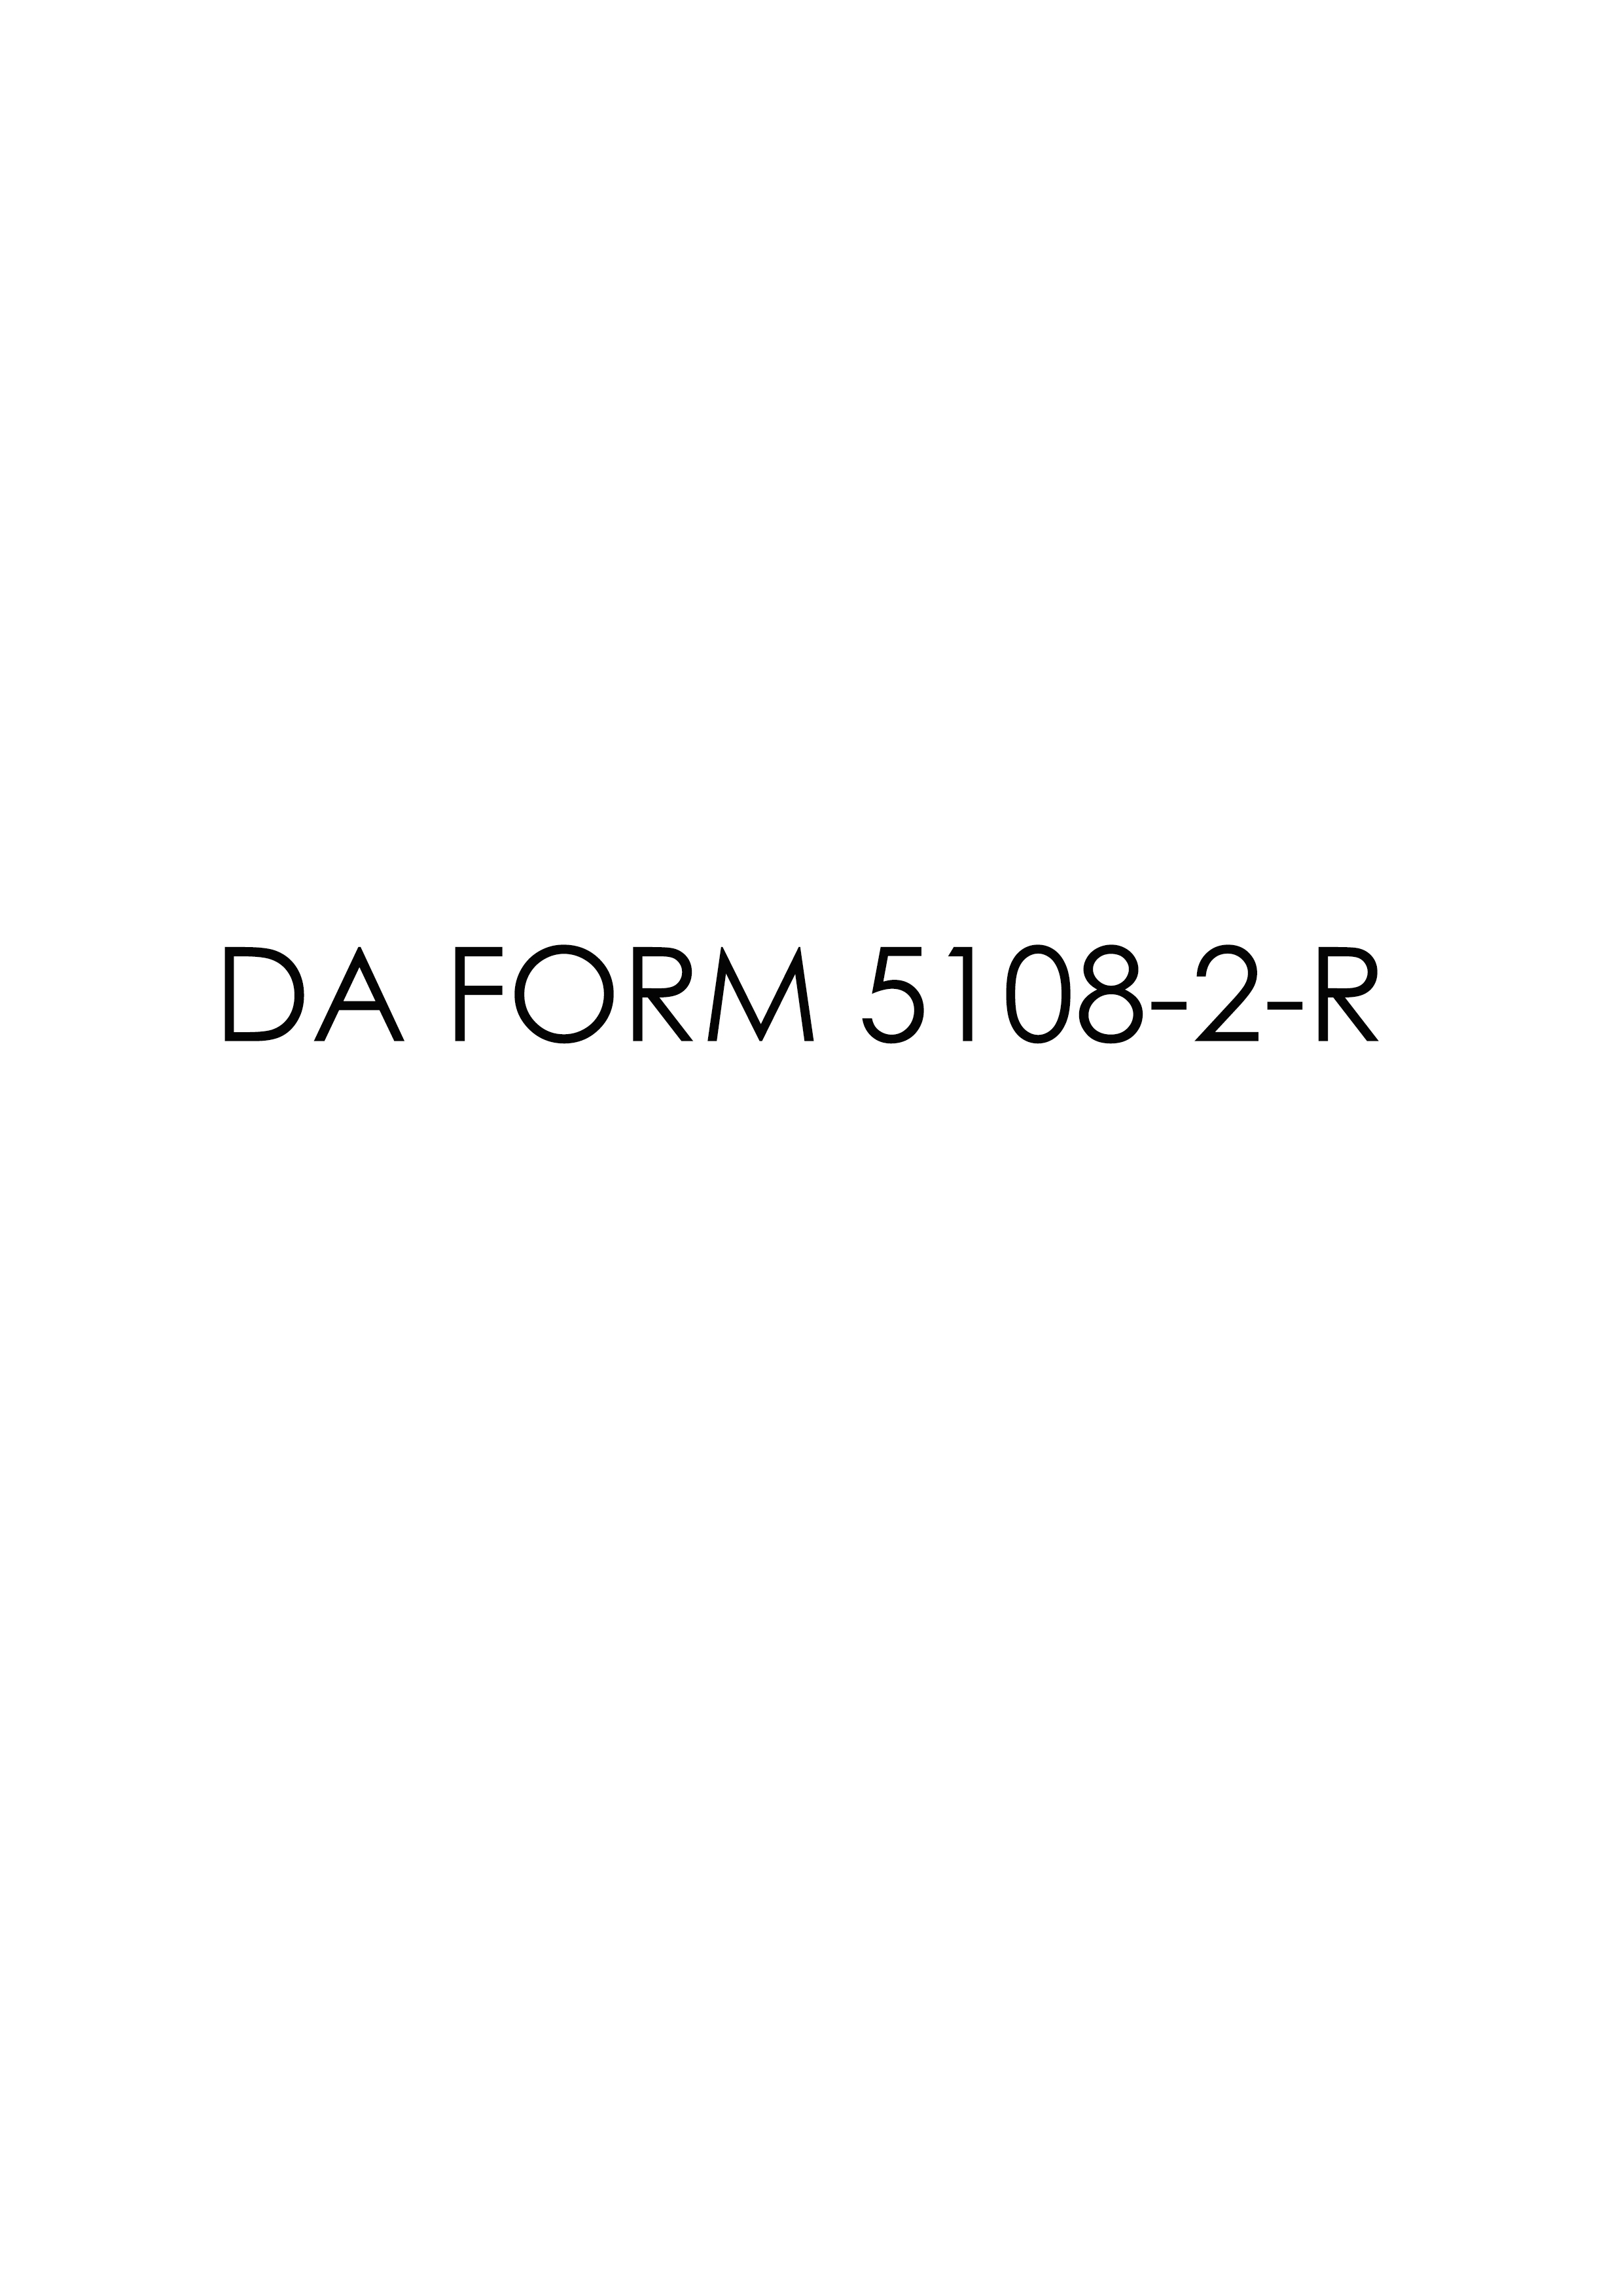 da Form 5108-2-R fillable